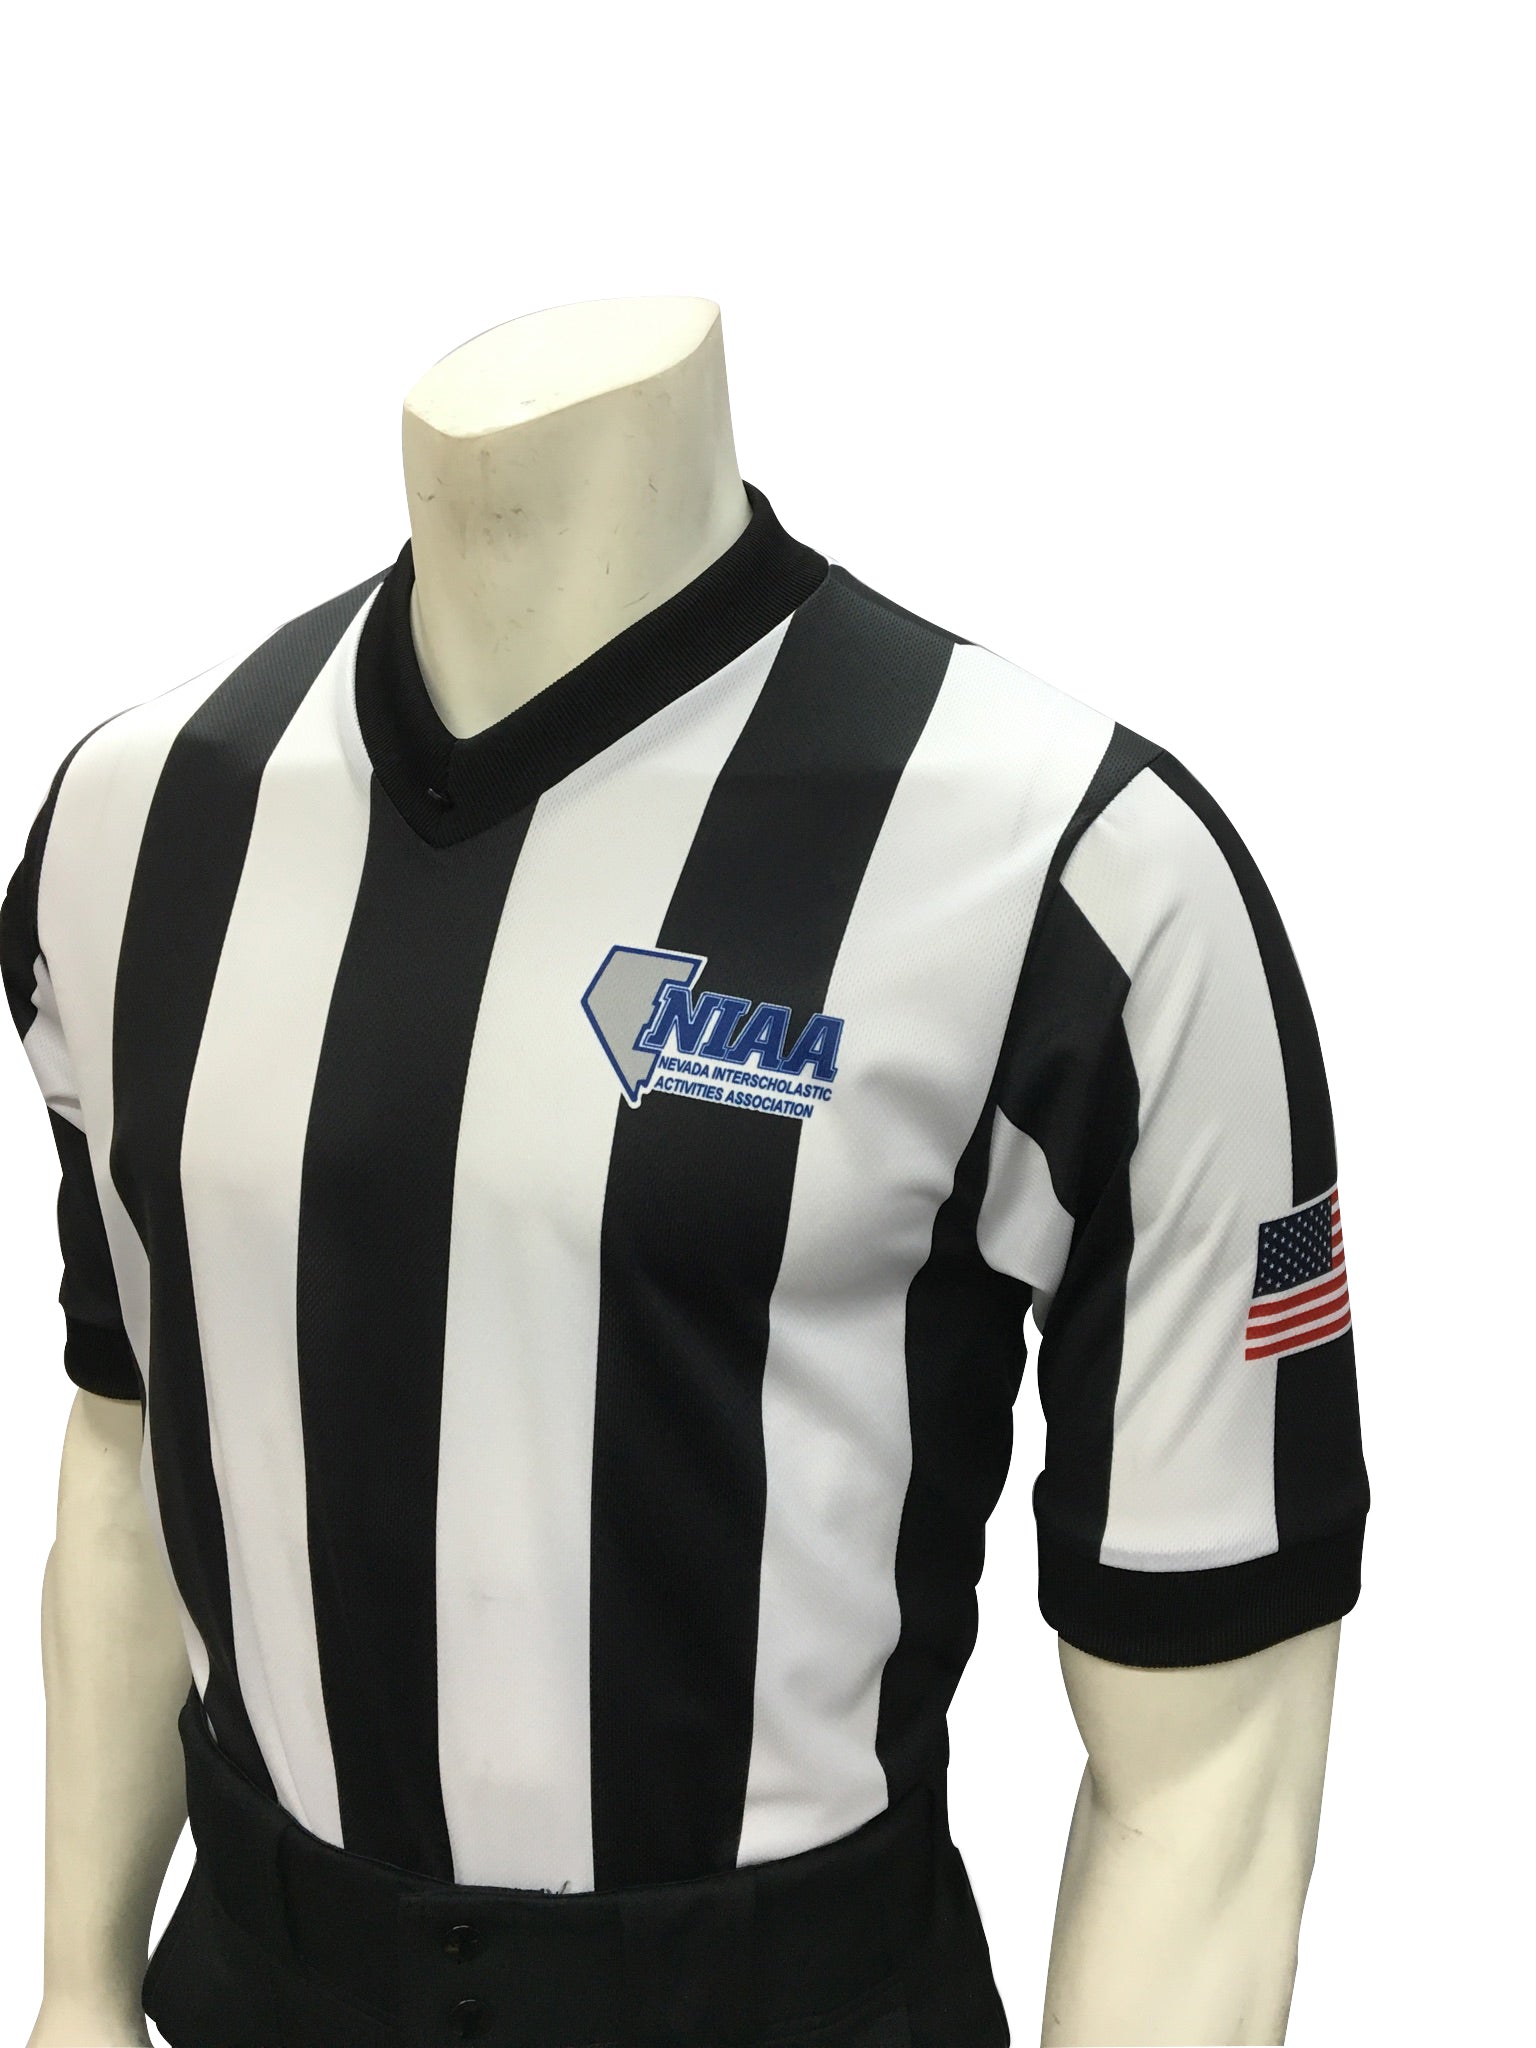 USA237NV-607 - Smitty "Made in USA" - "BODY FLEX" Basketball Men's Short Sleeve Shirt